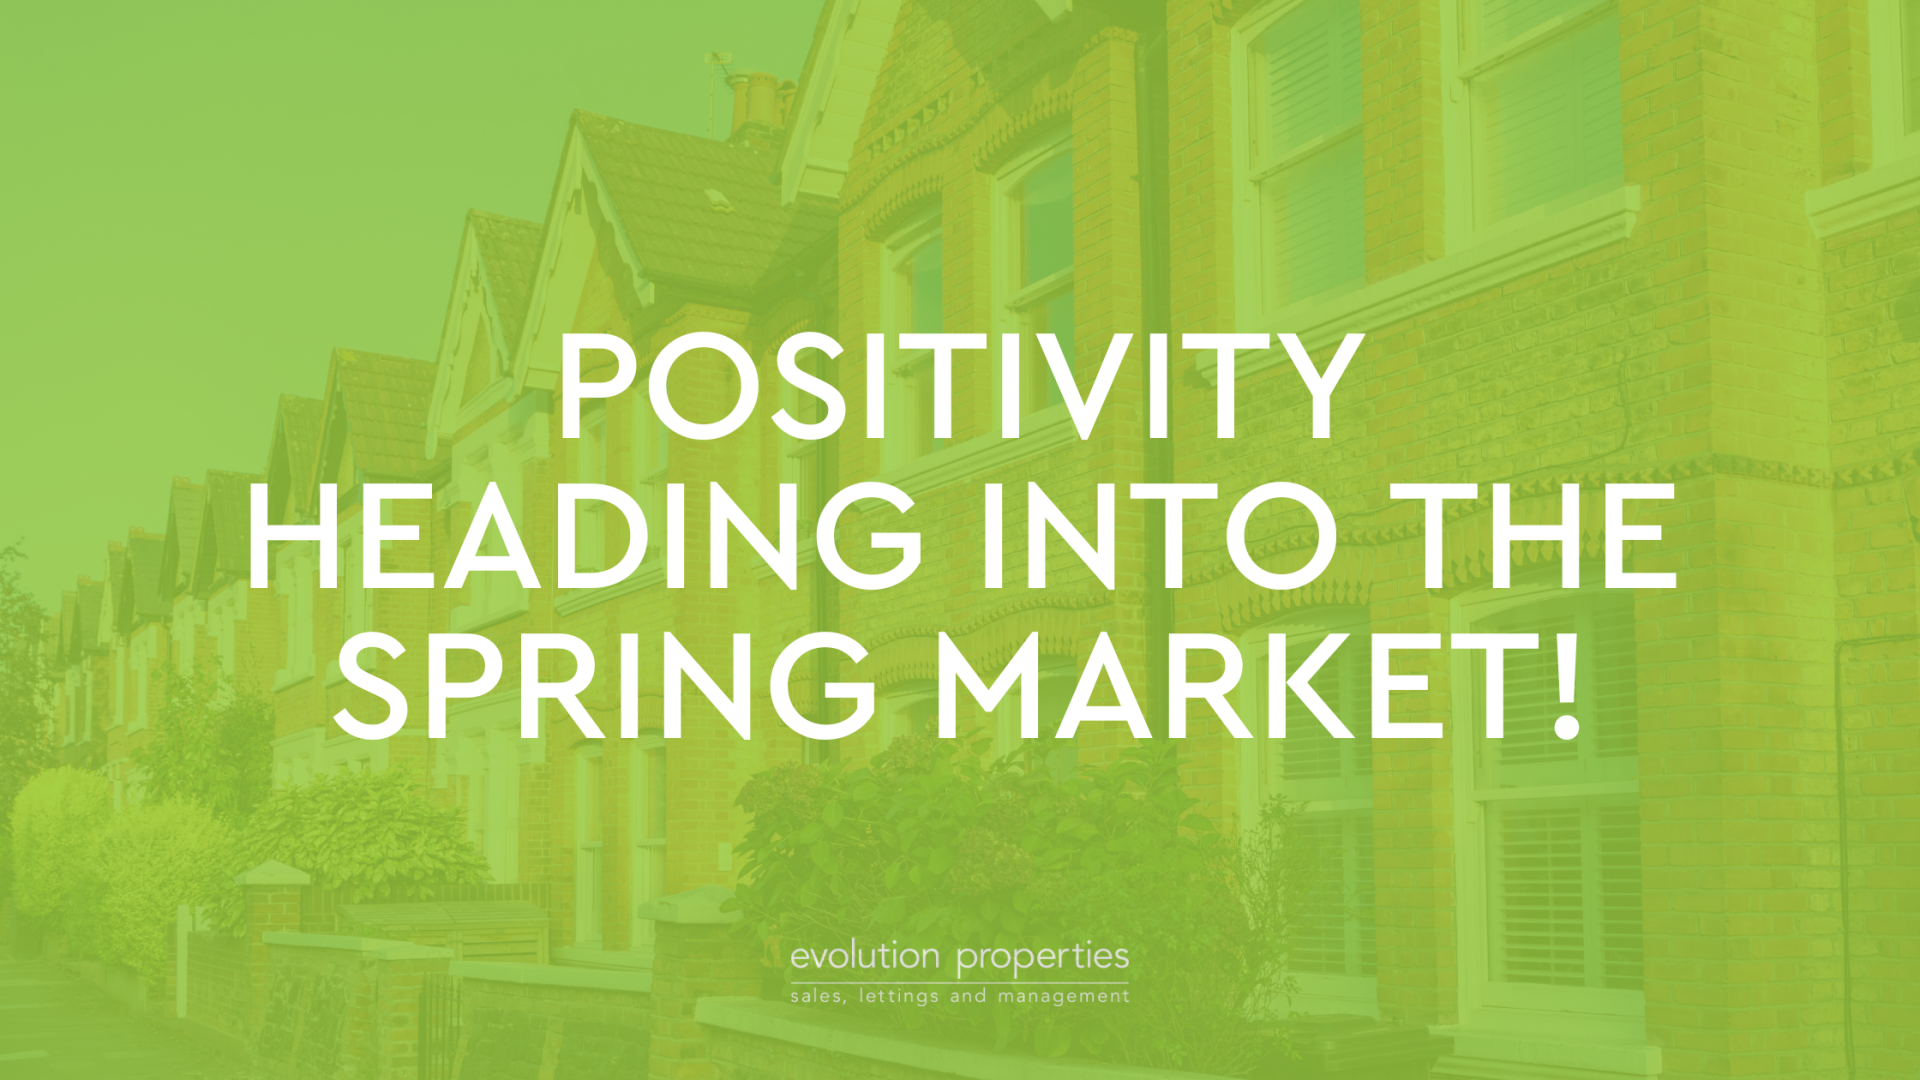 Positivity heading into the spring market!